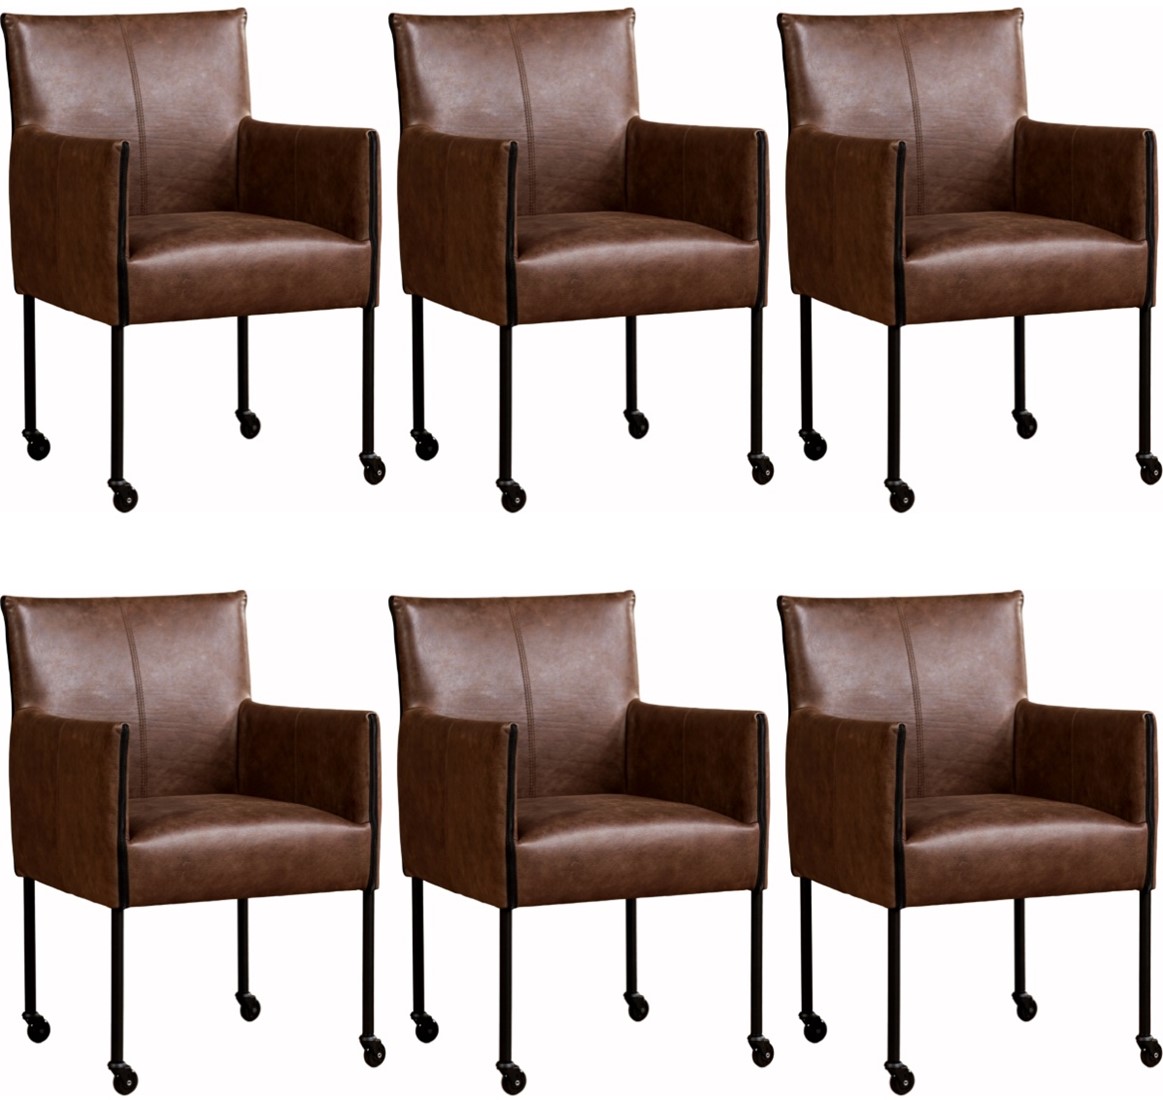 Leren eetkamerstoel More - met wieltjes - set van stoelen - Granada leer Cognac - Kleur poot, RVS - Skate wiel transparant ShopX